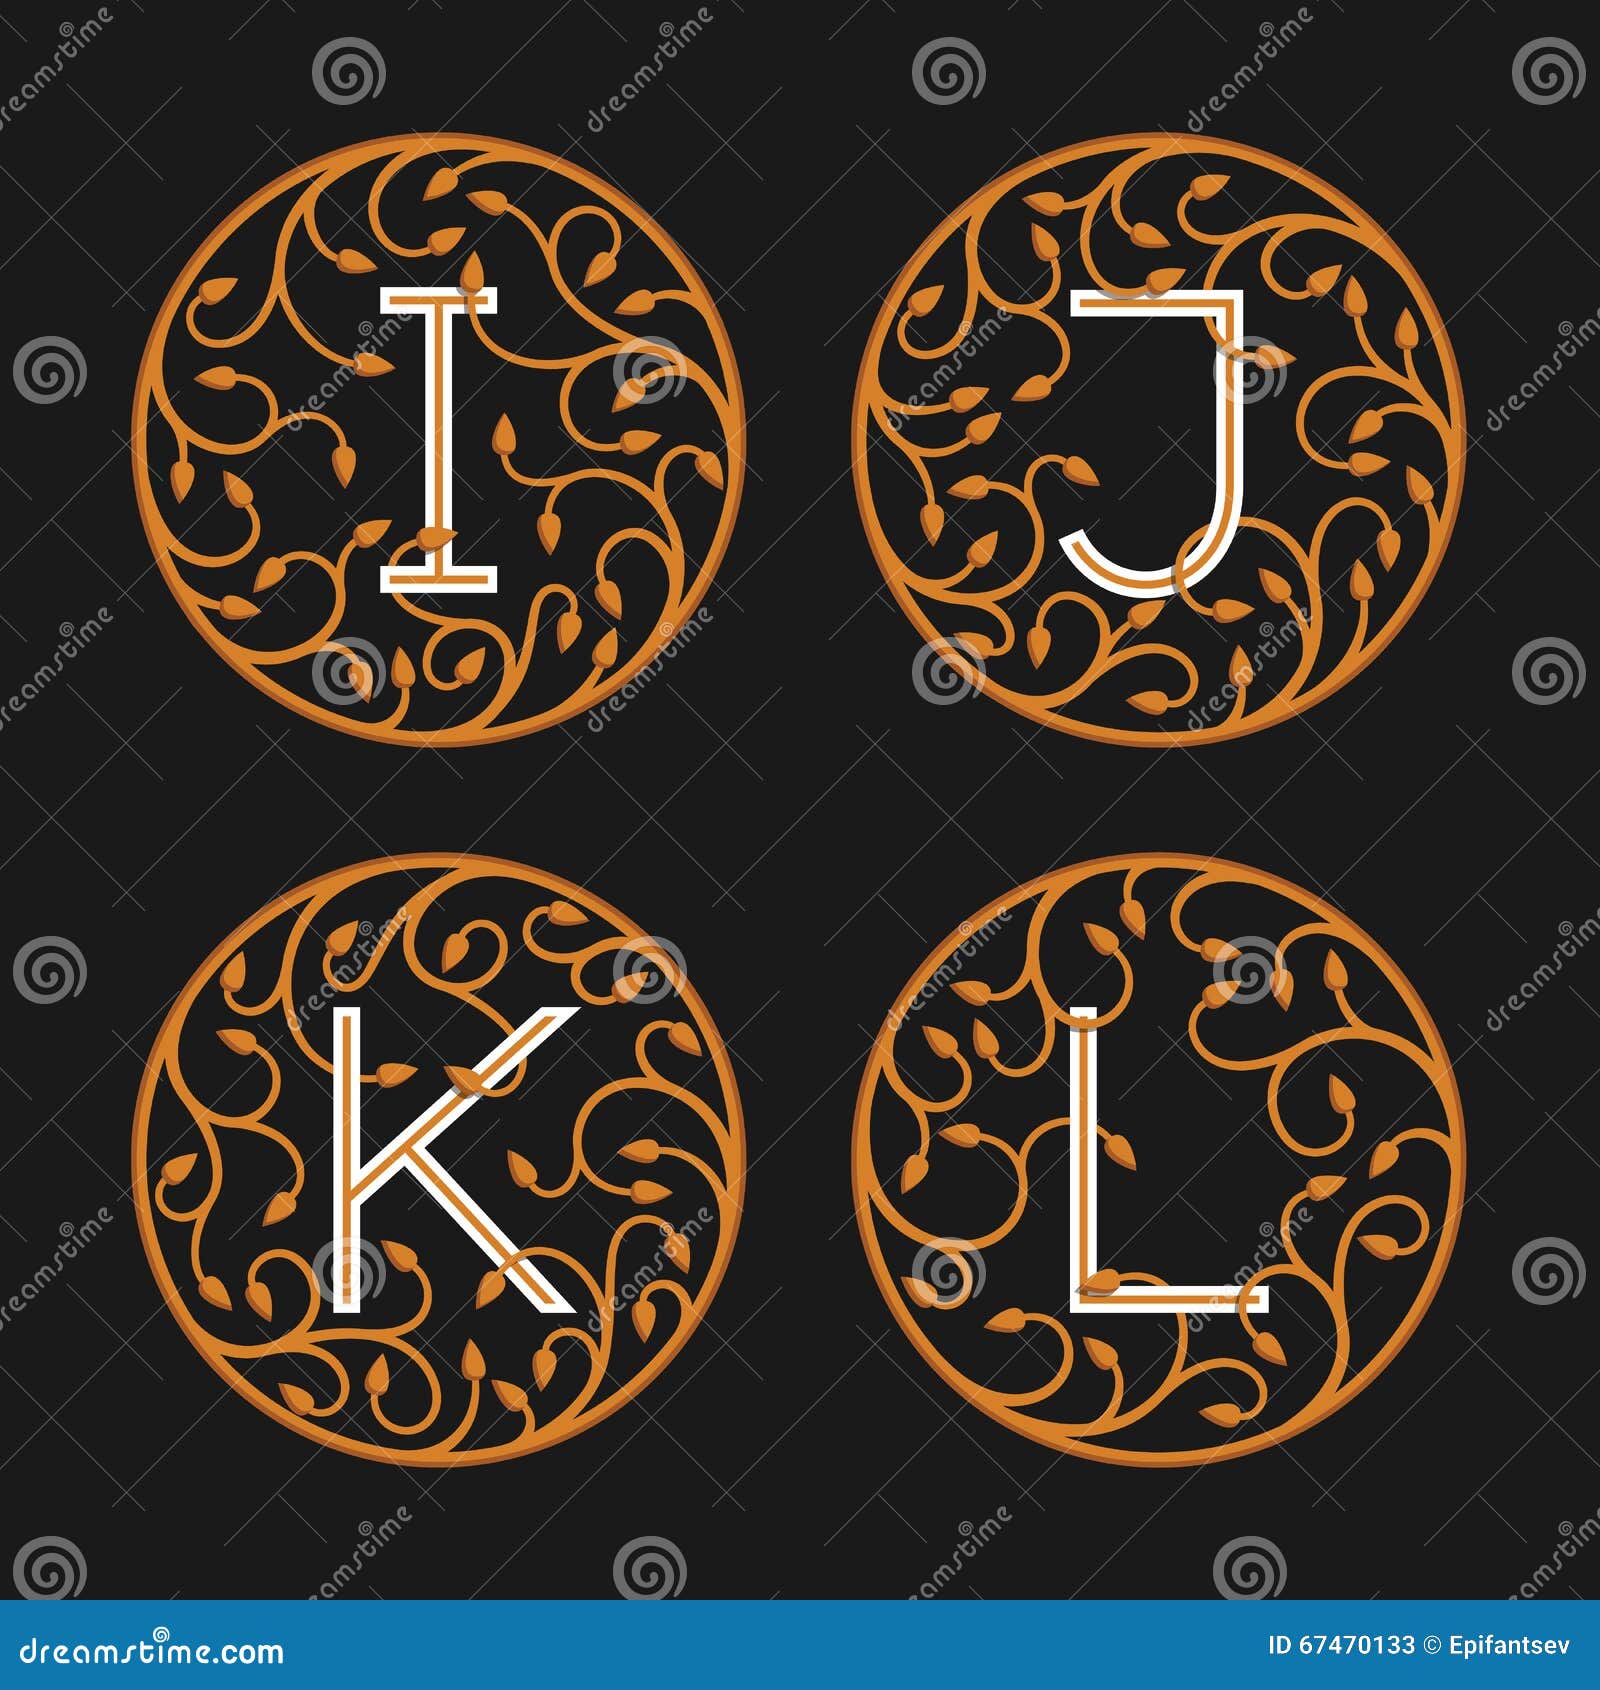 Decorative Initial Letters I J K L Stock Vector